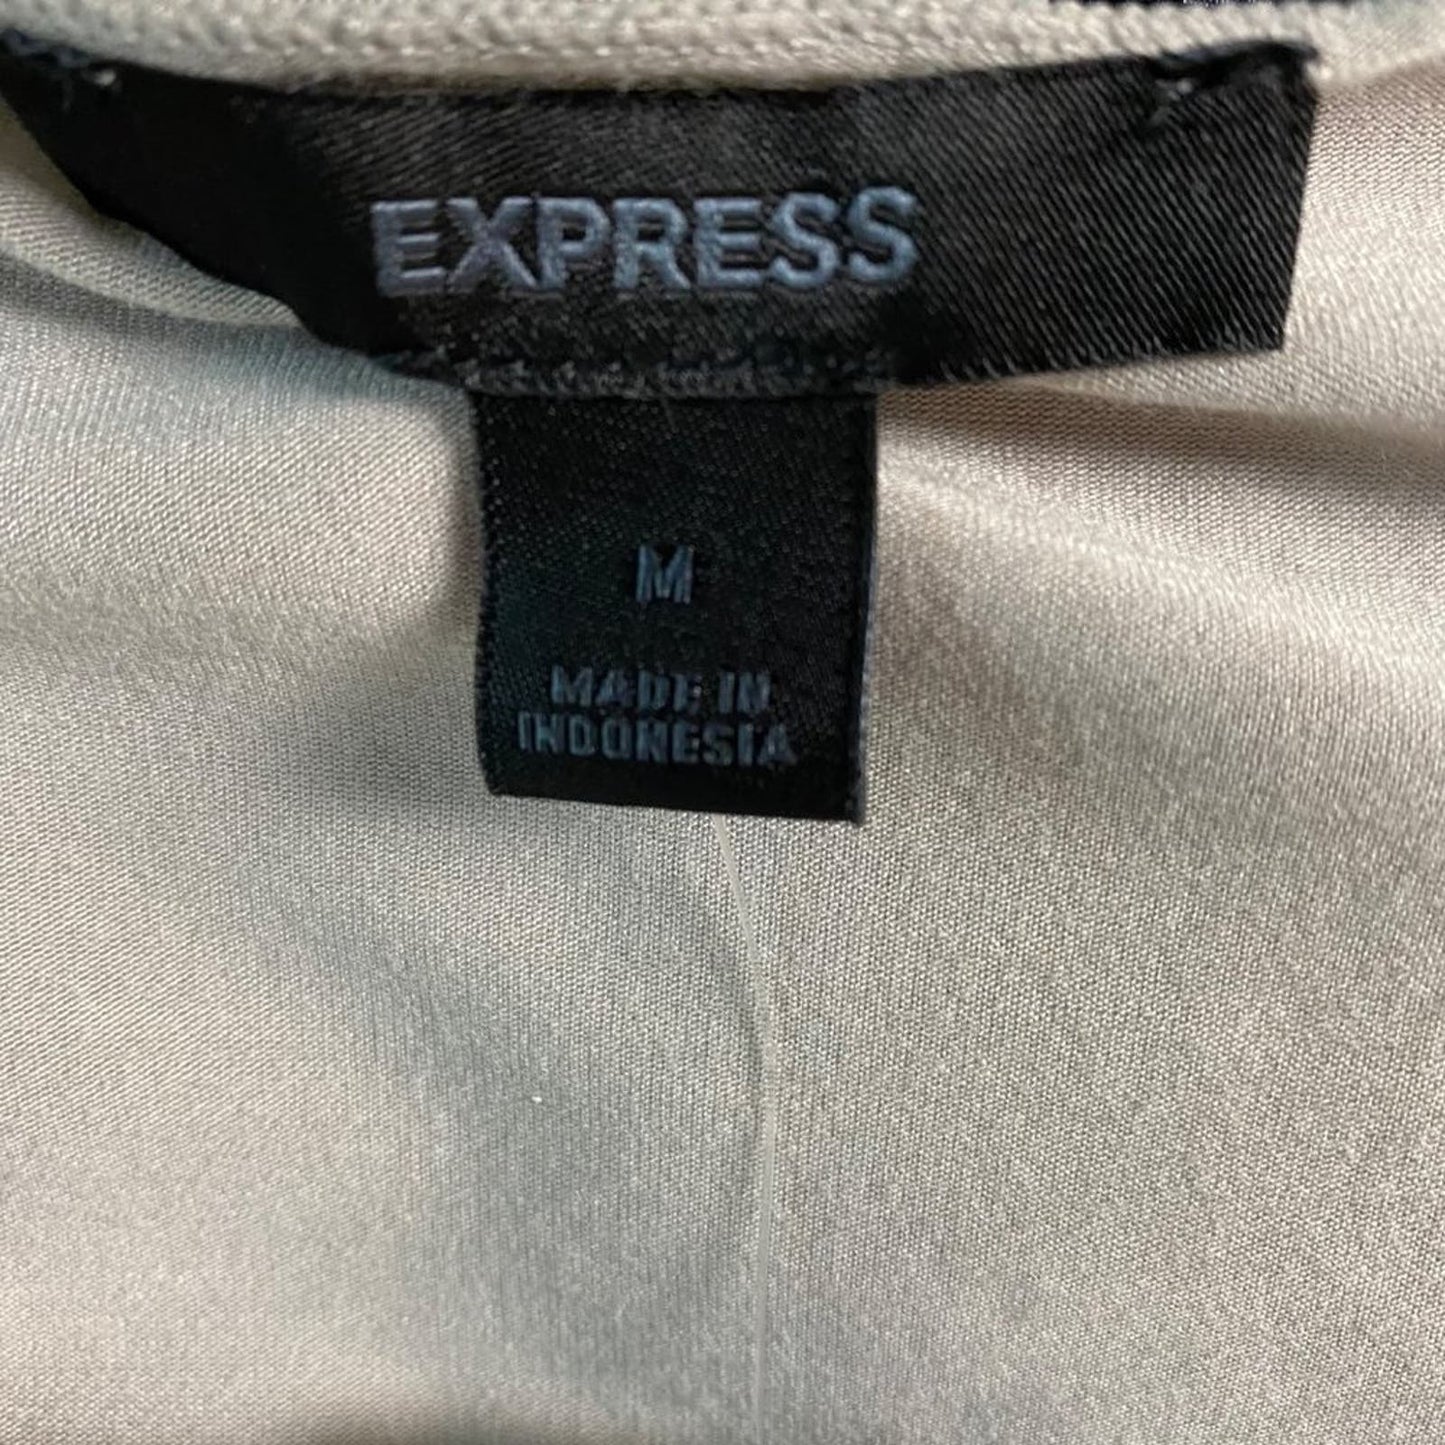 Express sz M Short sleeve lace trim blouse NWT